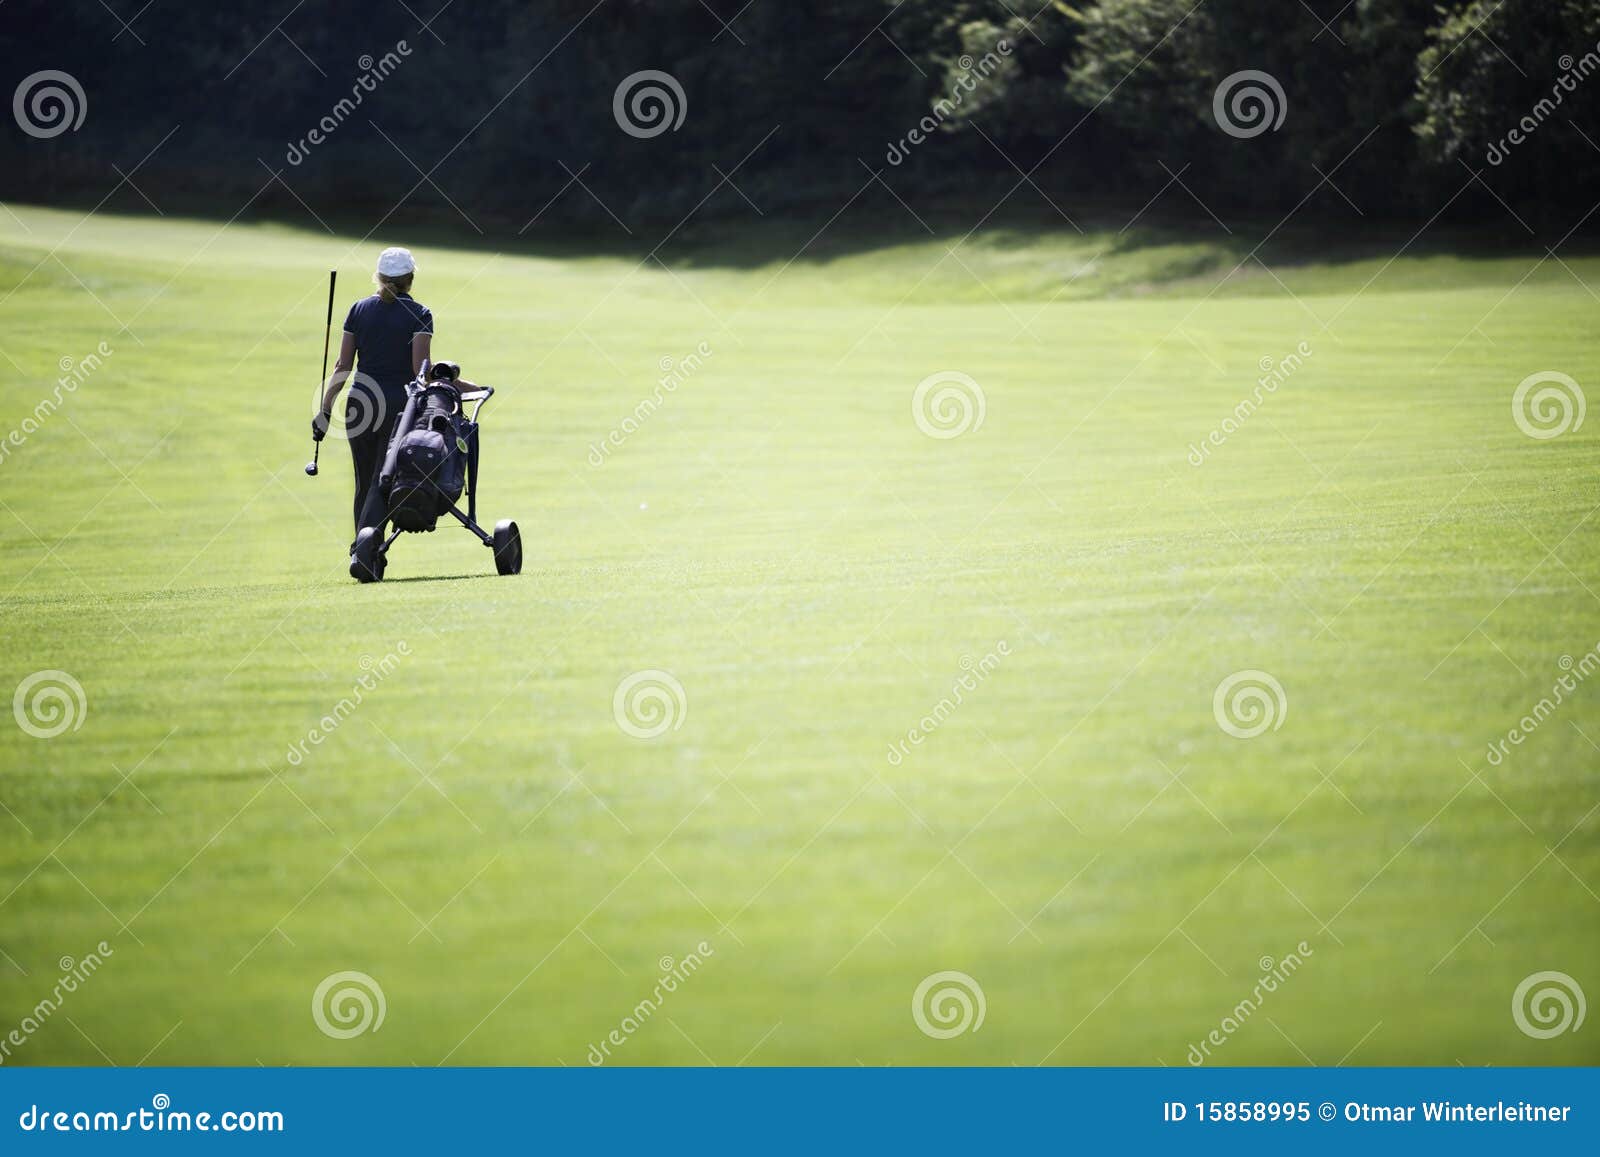 golfer walking on fairway with bag.